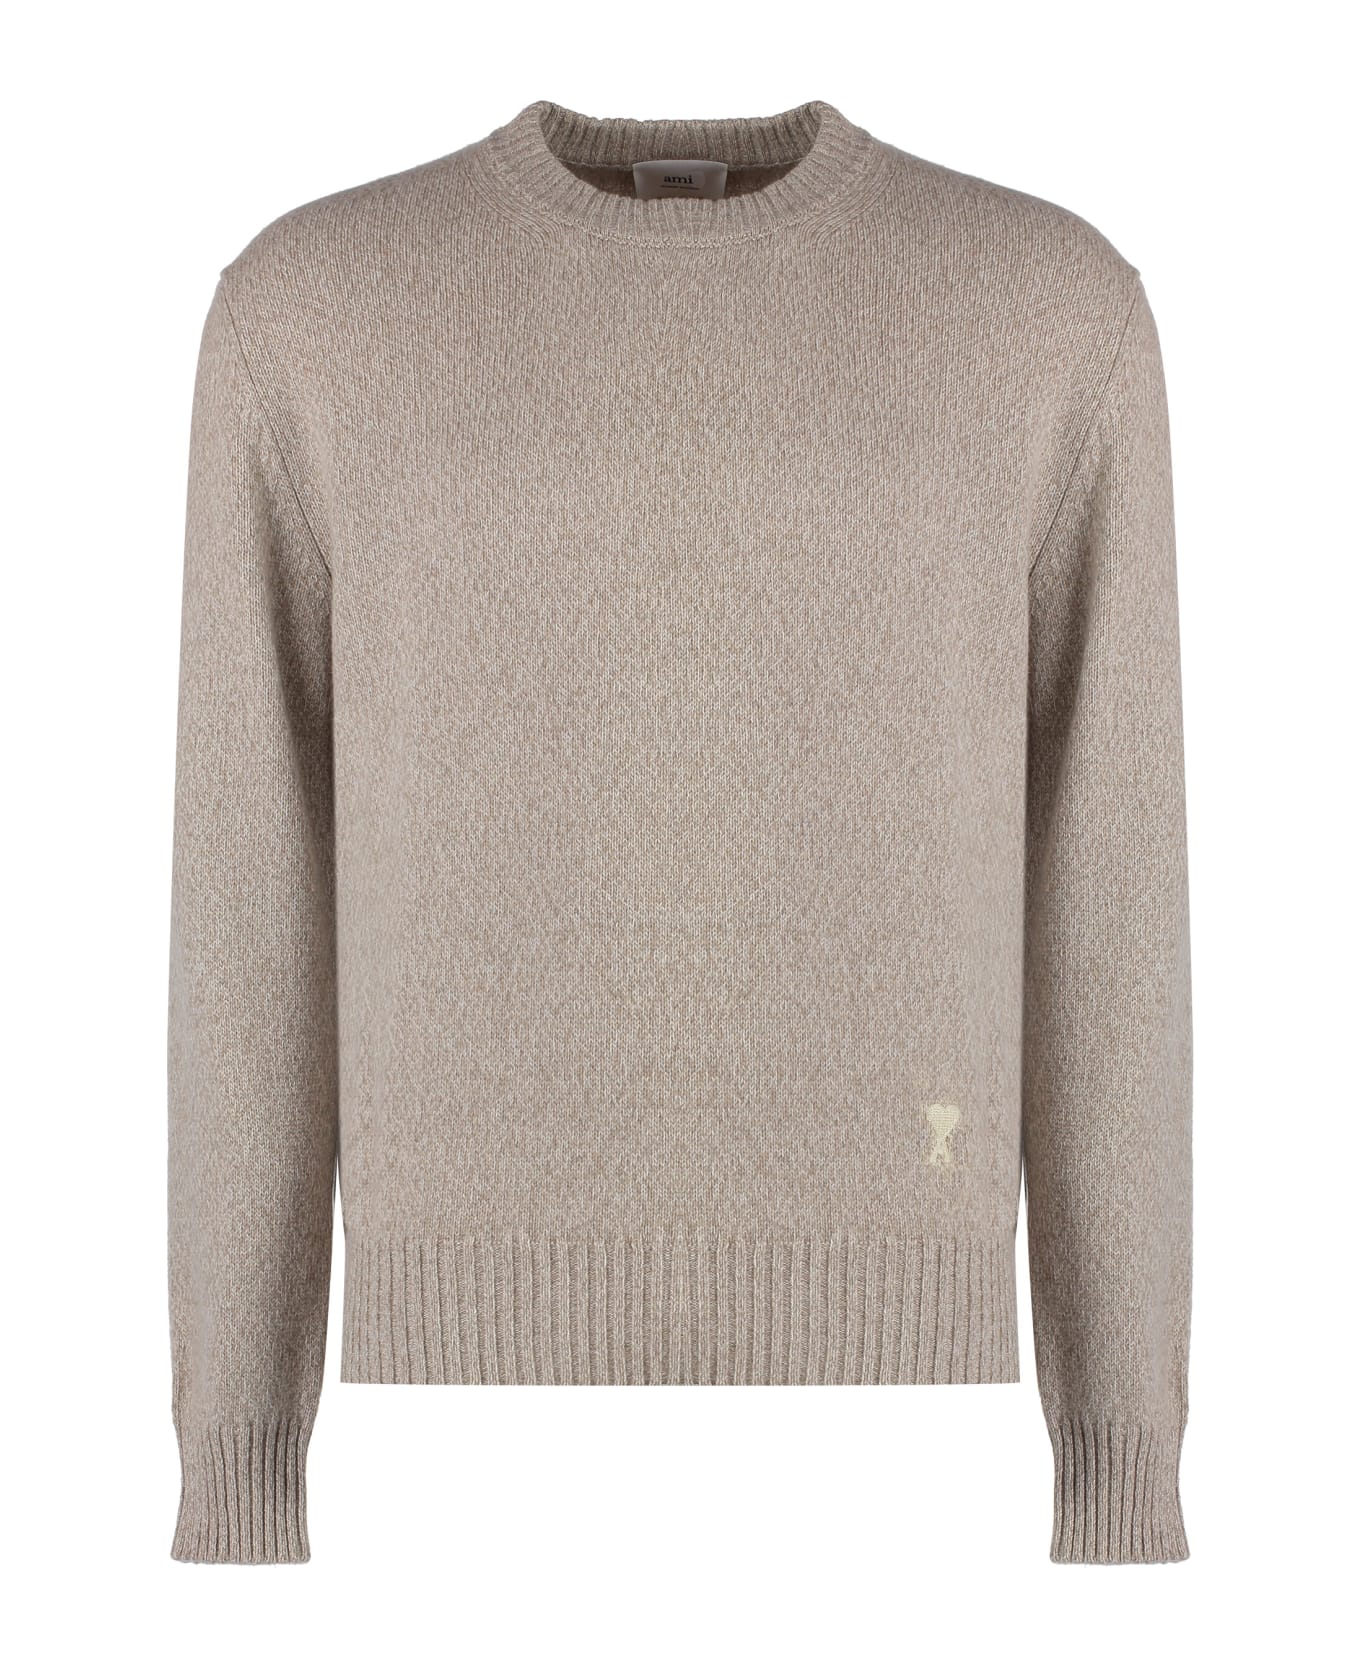 Ami Alexandre Mattiussi Wool And Cashmere Sweater - Beige